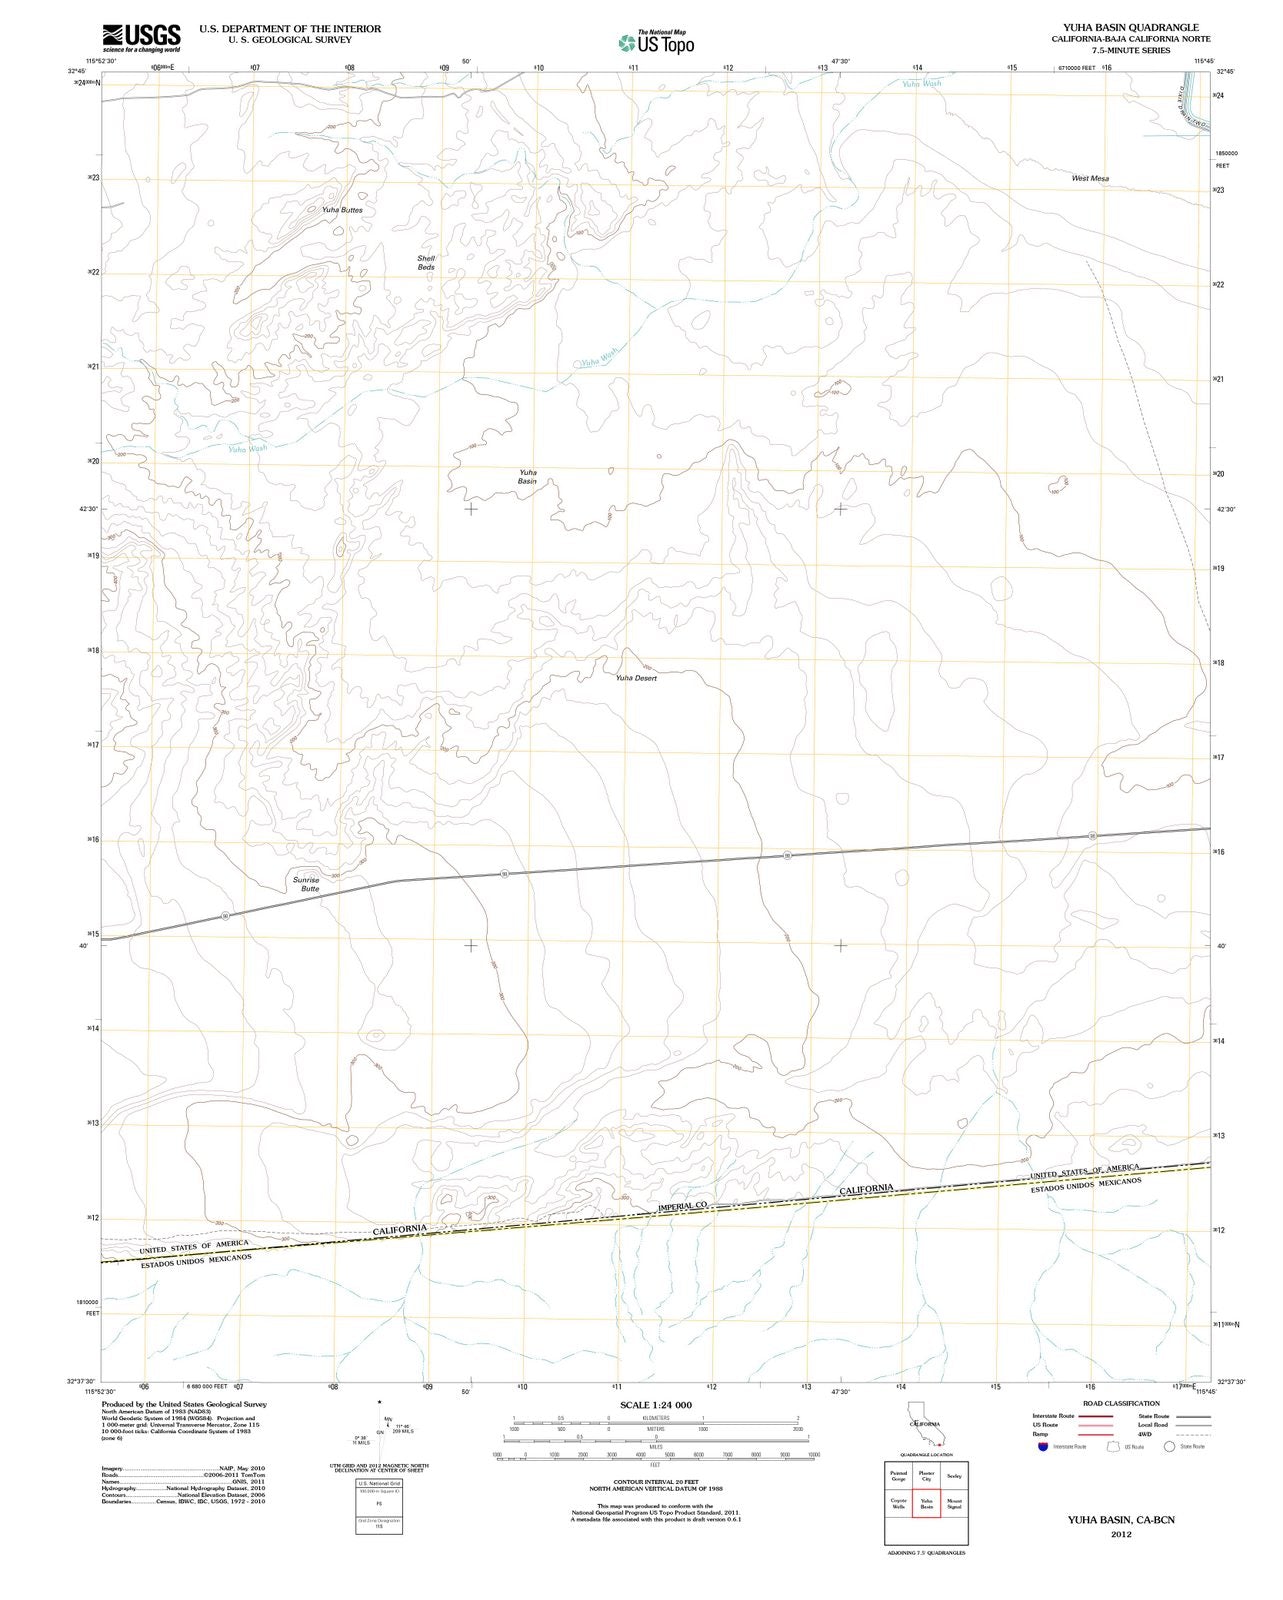 2012 Yuha Basin, CA - California - USGS Topographic Map